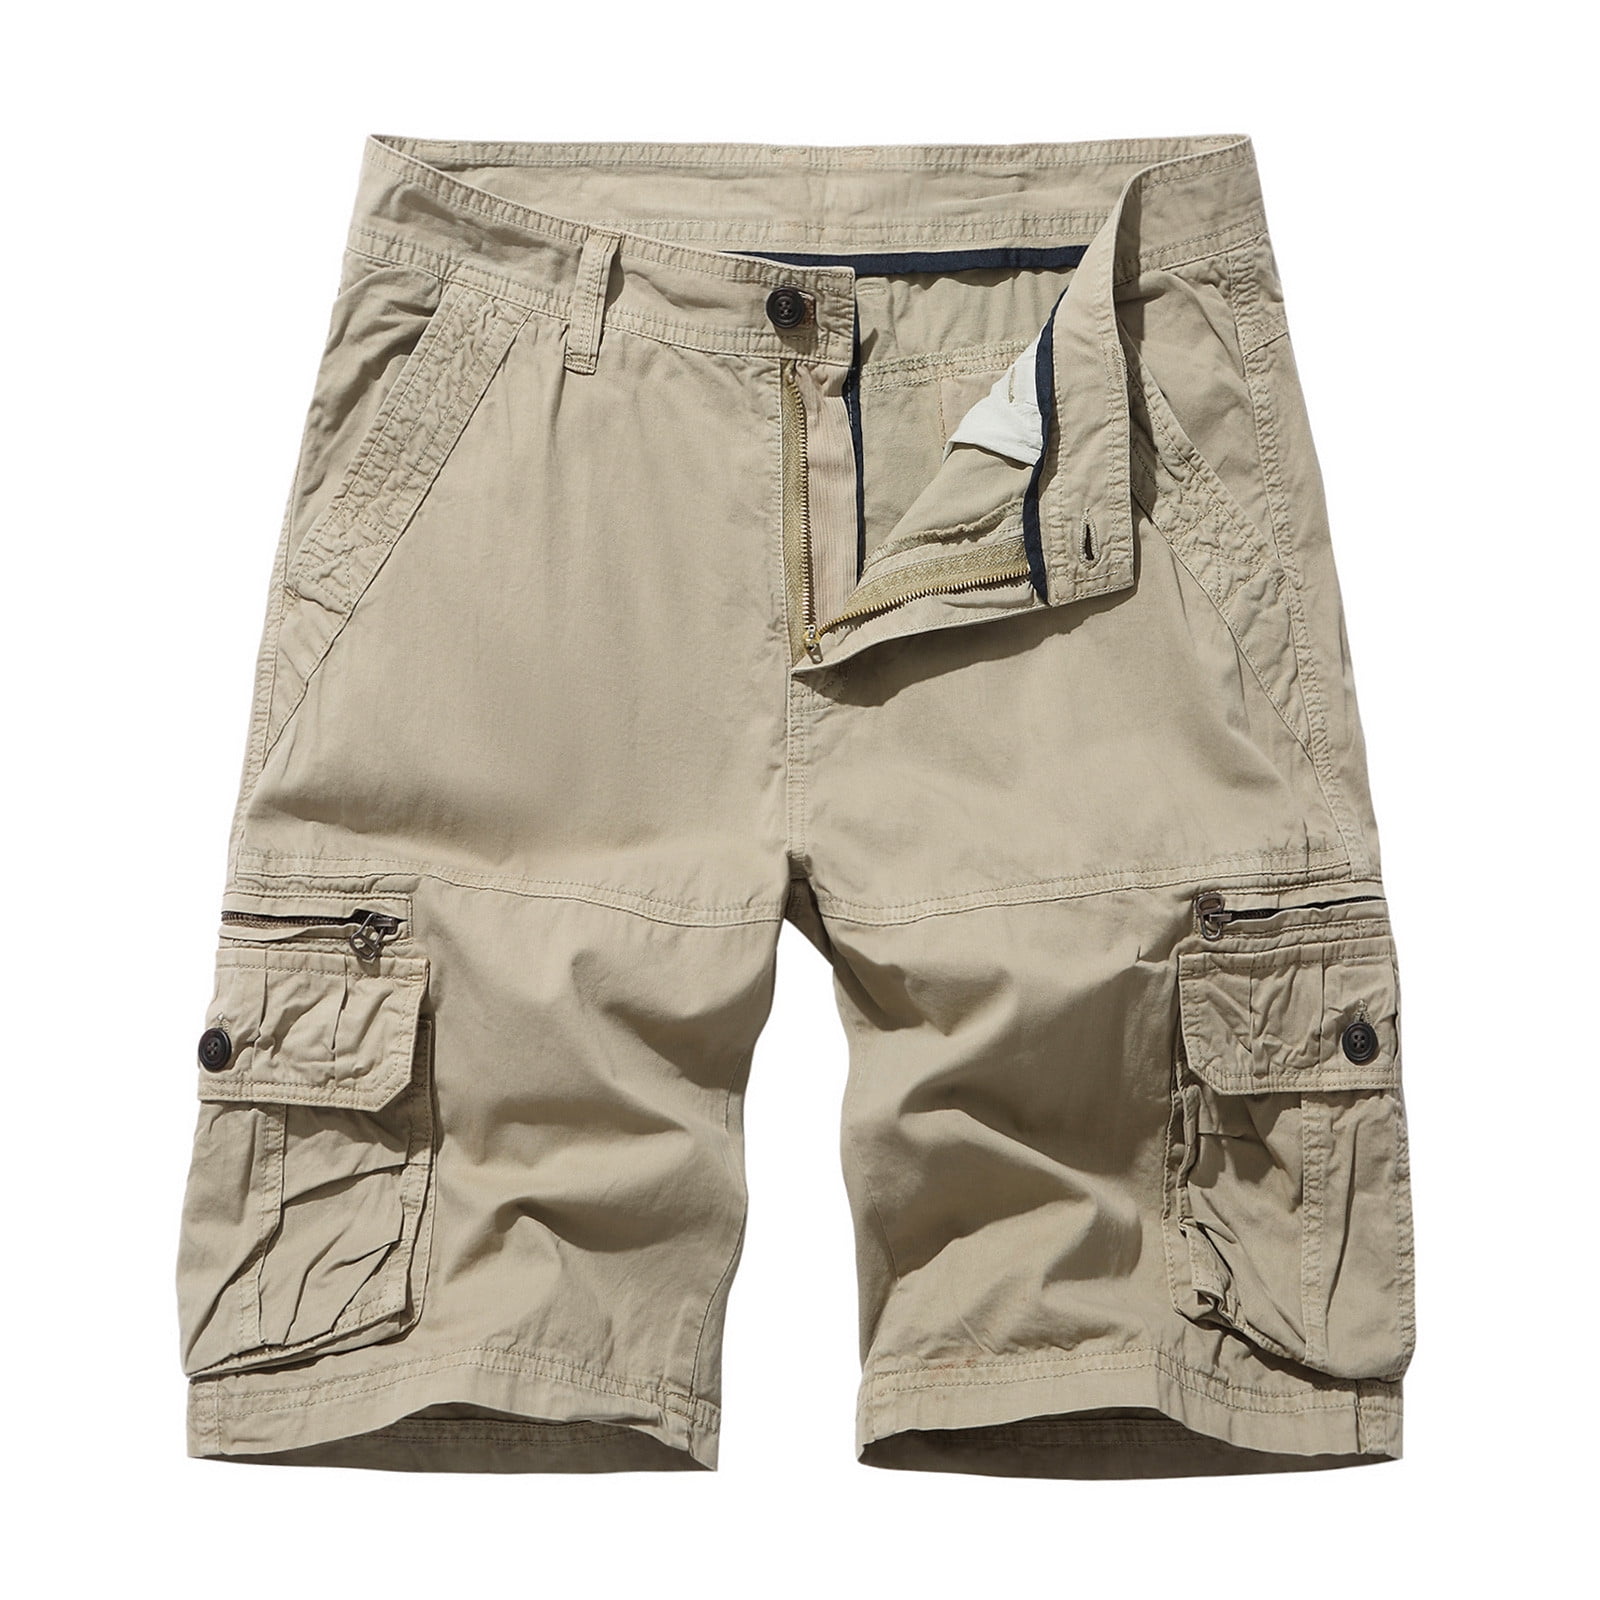 jsaierl Men's Cargo Shorts Plus Size Multi Pockets Shorts Outdoor ...